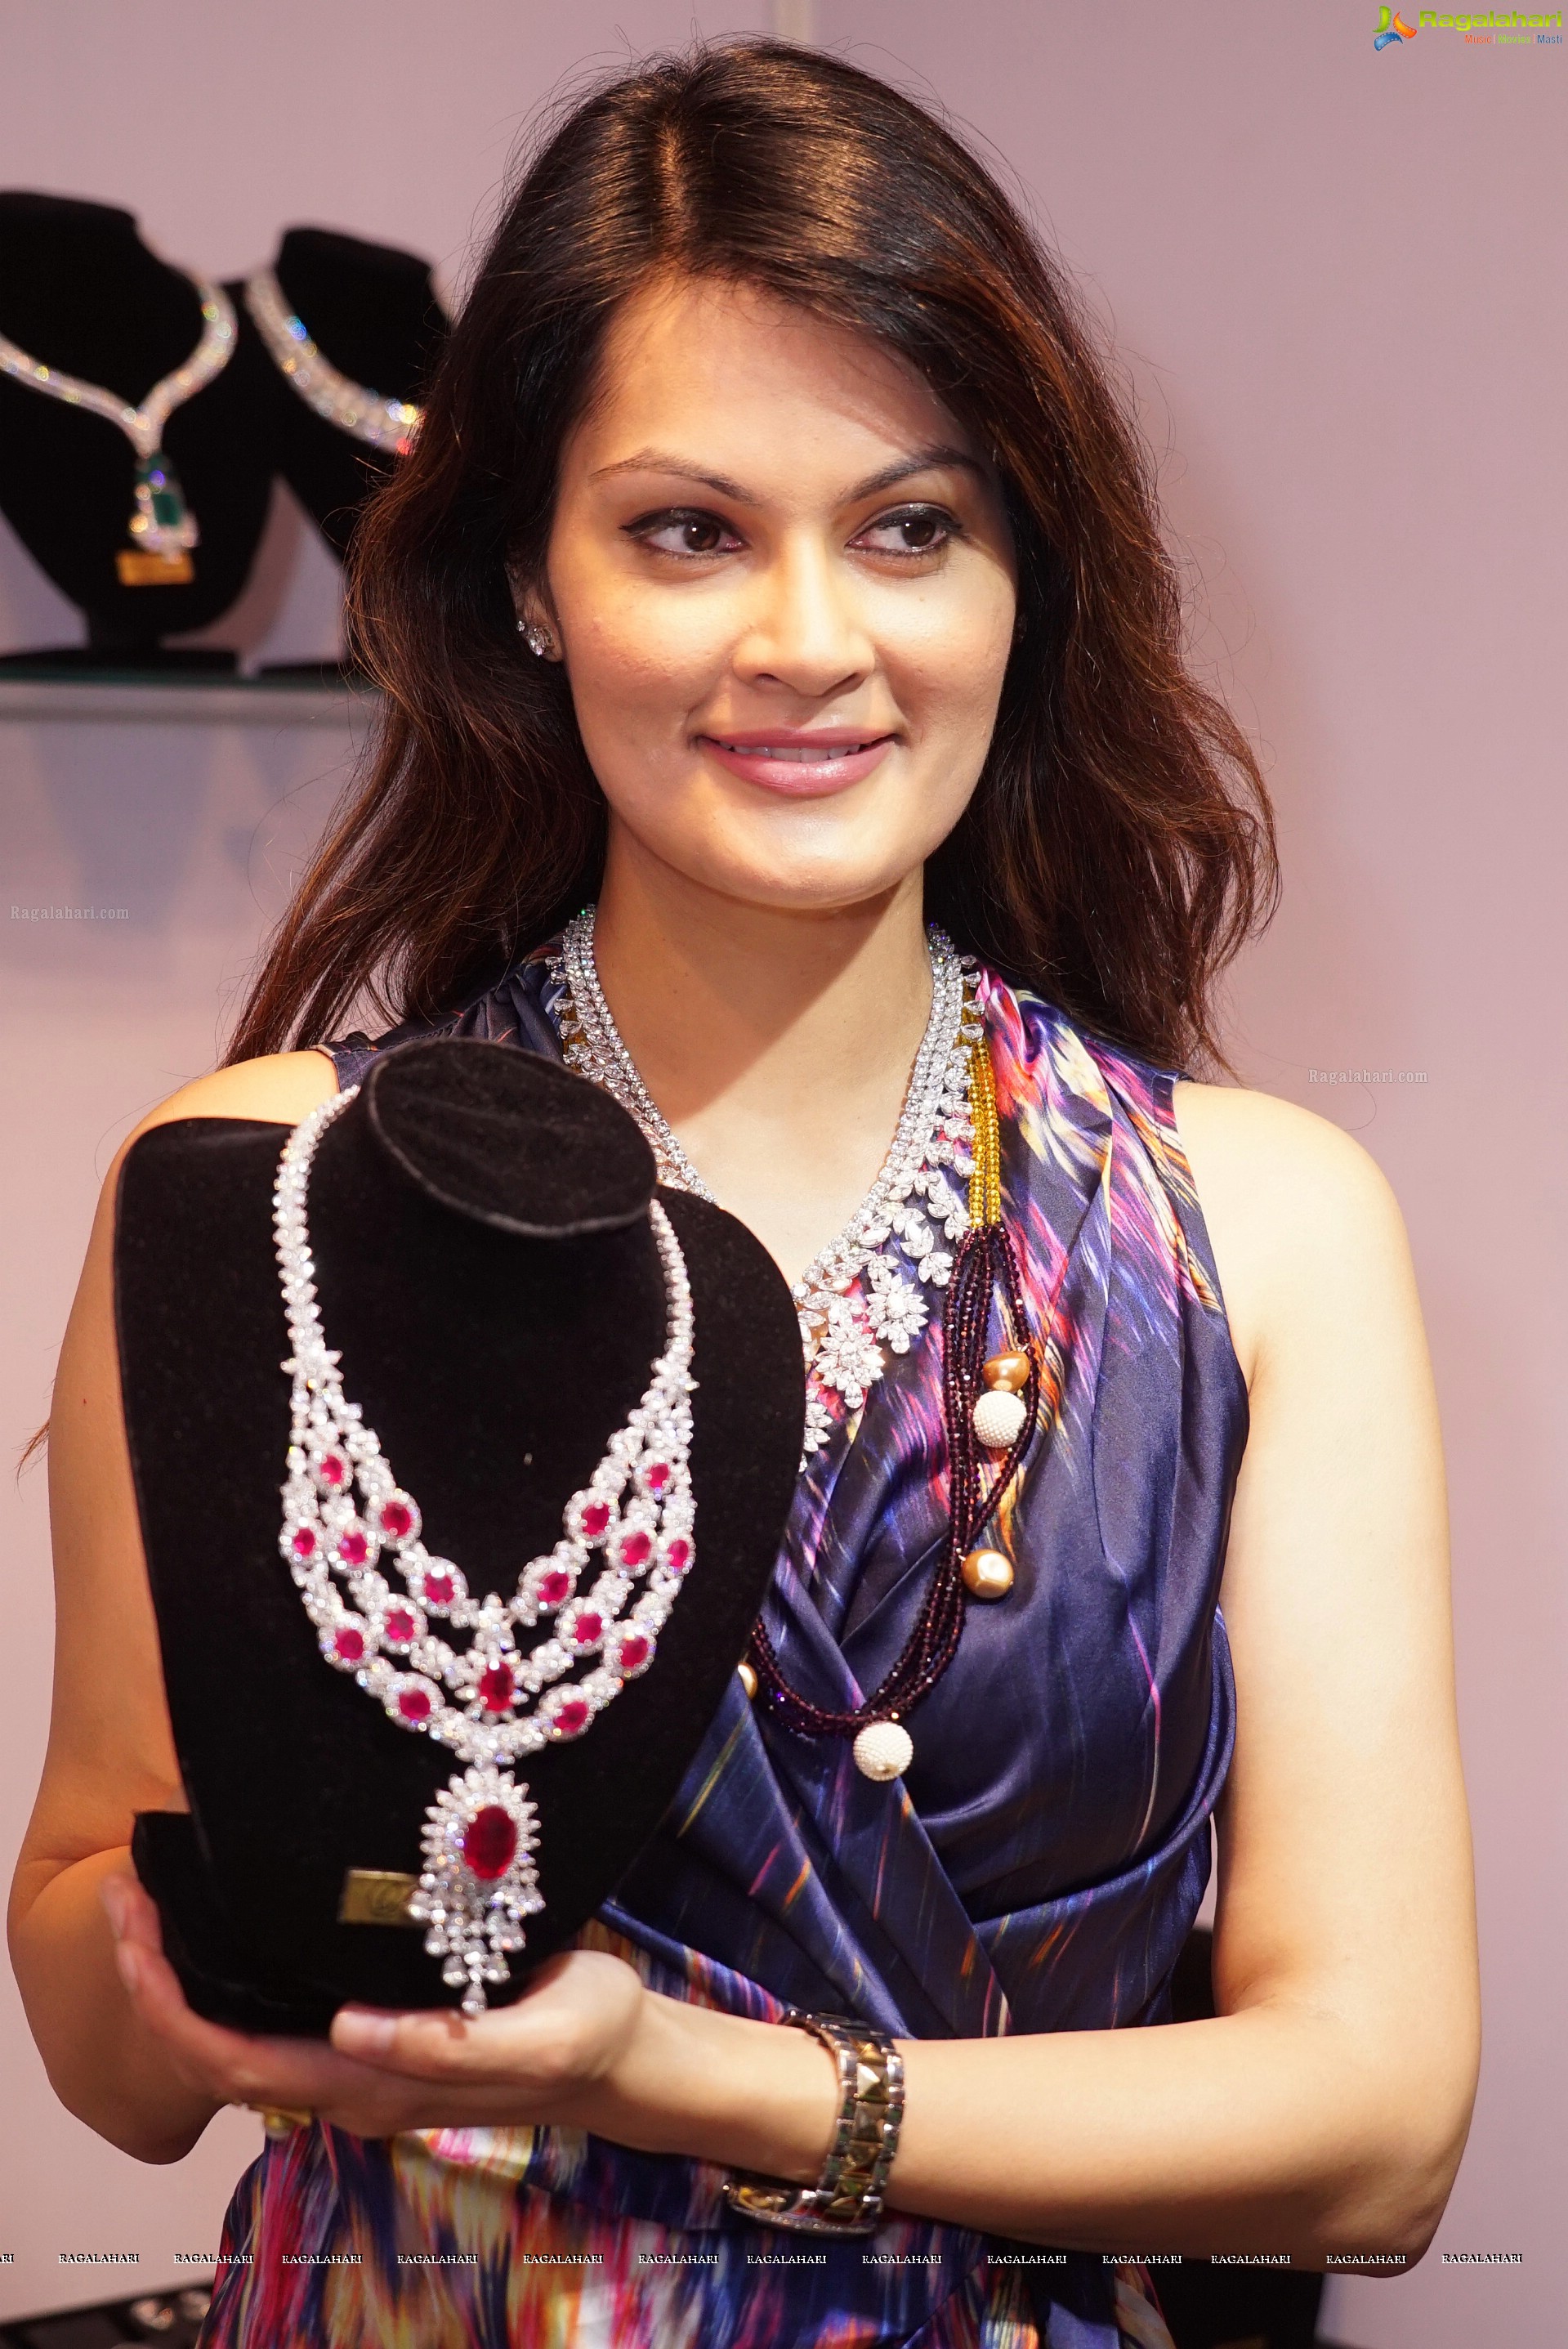 Angela Kumar (High Definition)